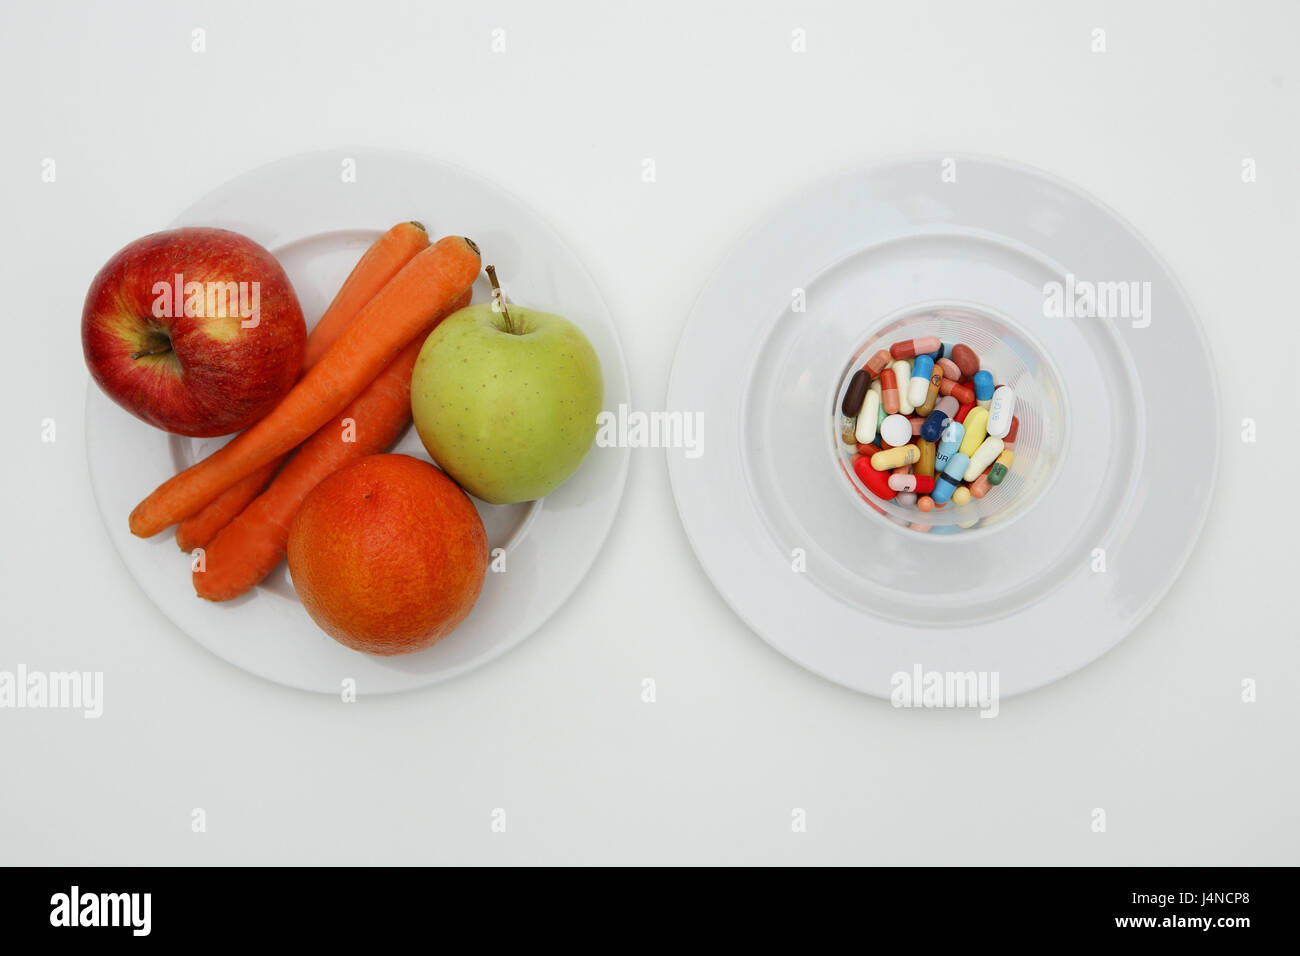 Plate, drugs, fruit, vegetables, Stock Photo